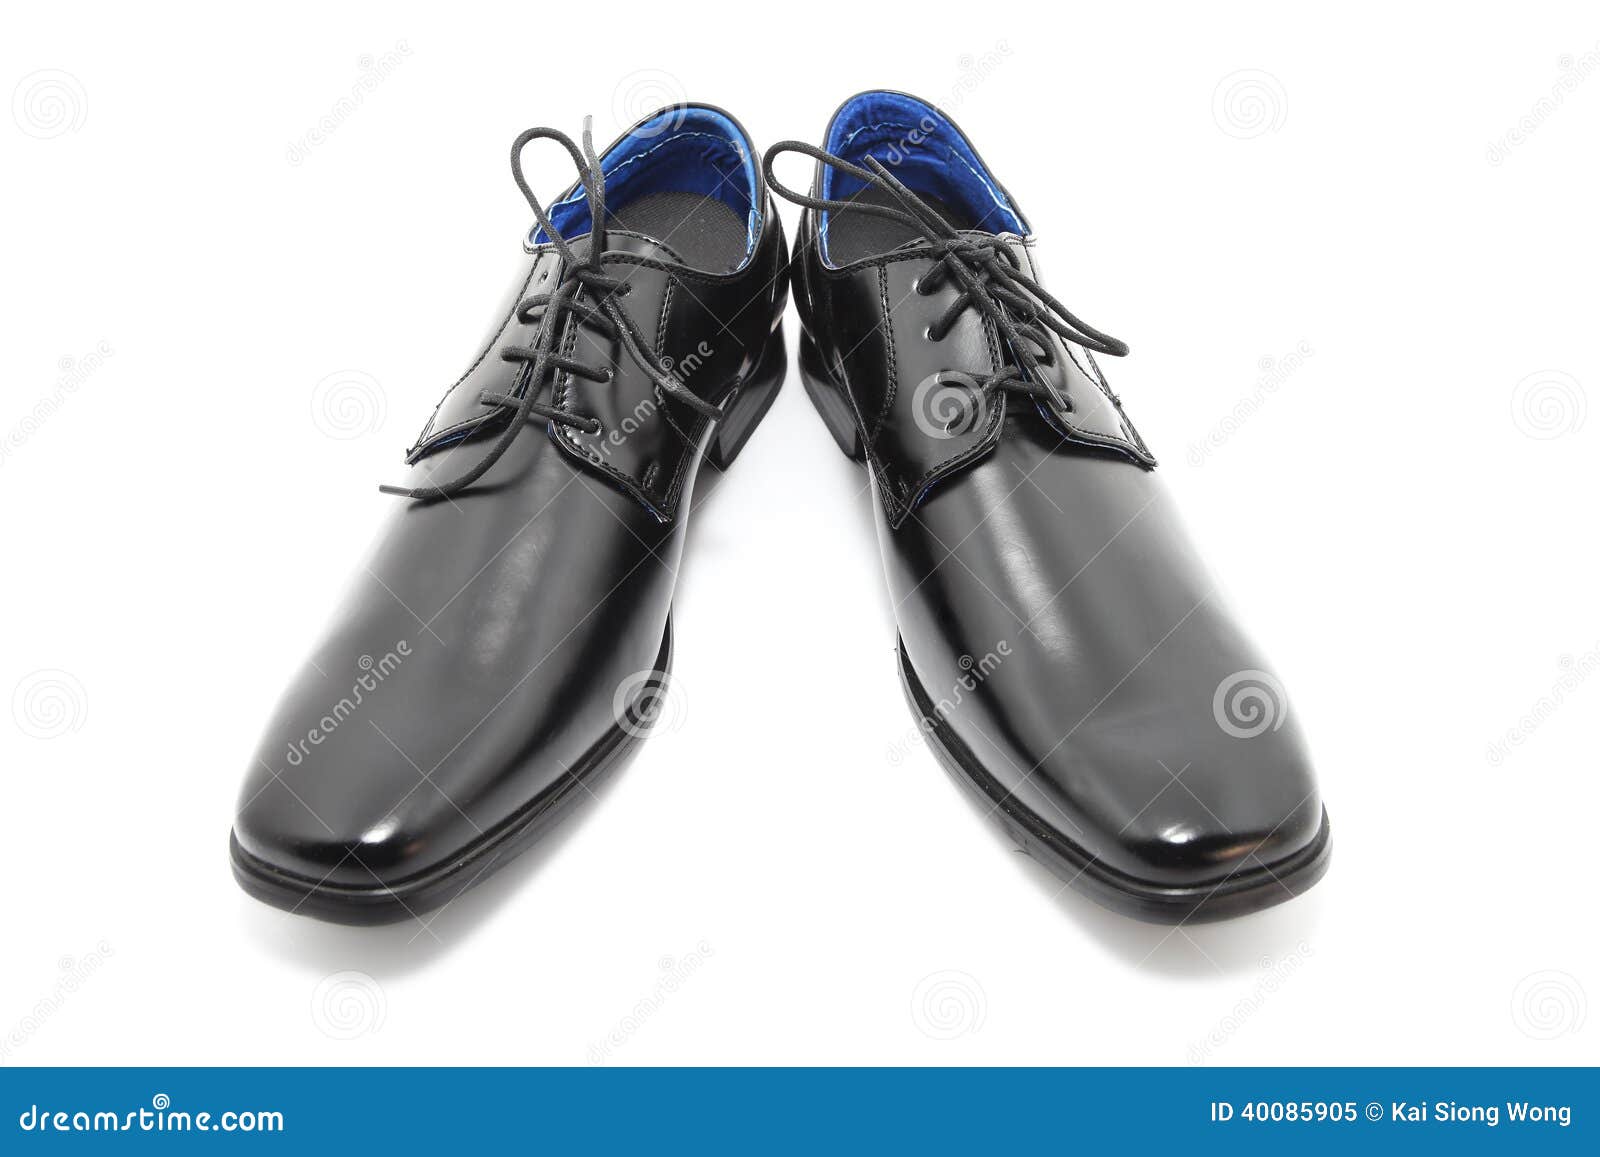 Black Leather Shoes stock image. Image of human, shine - 40085905